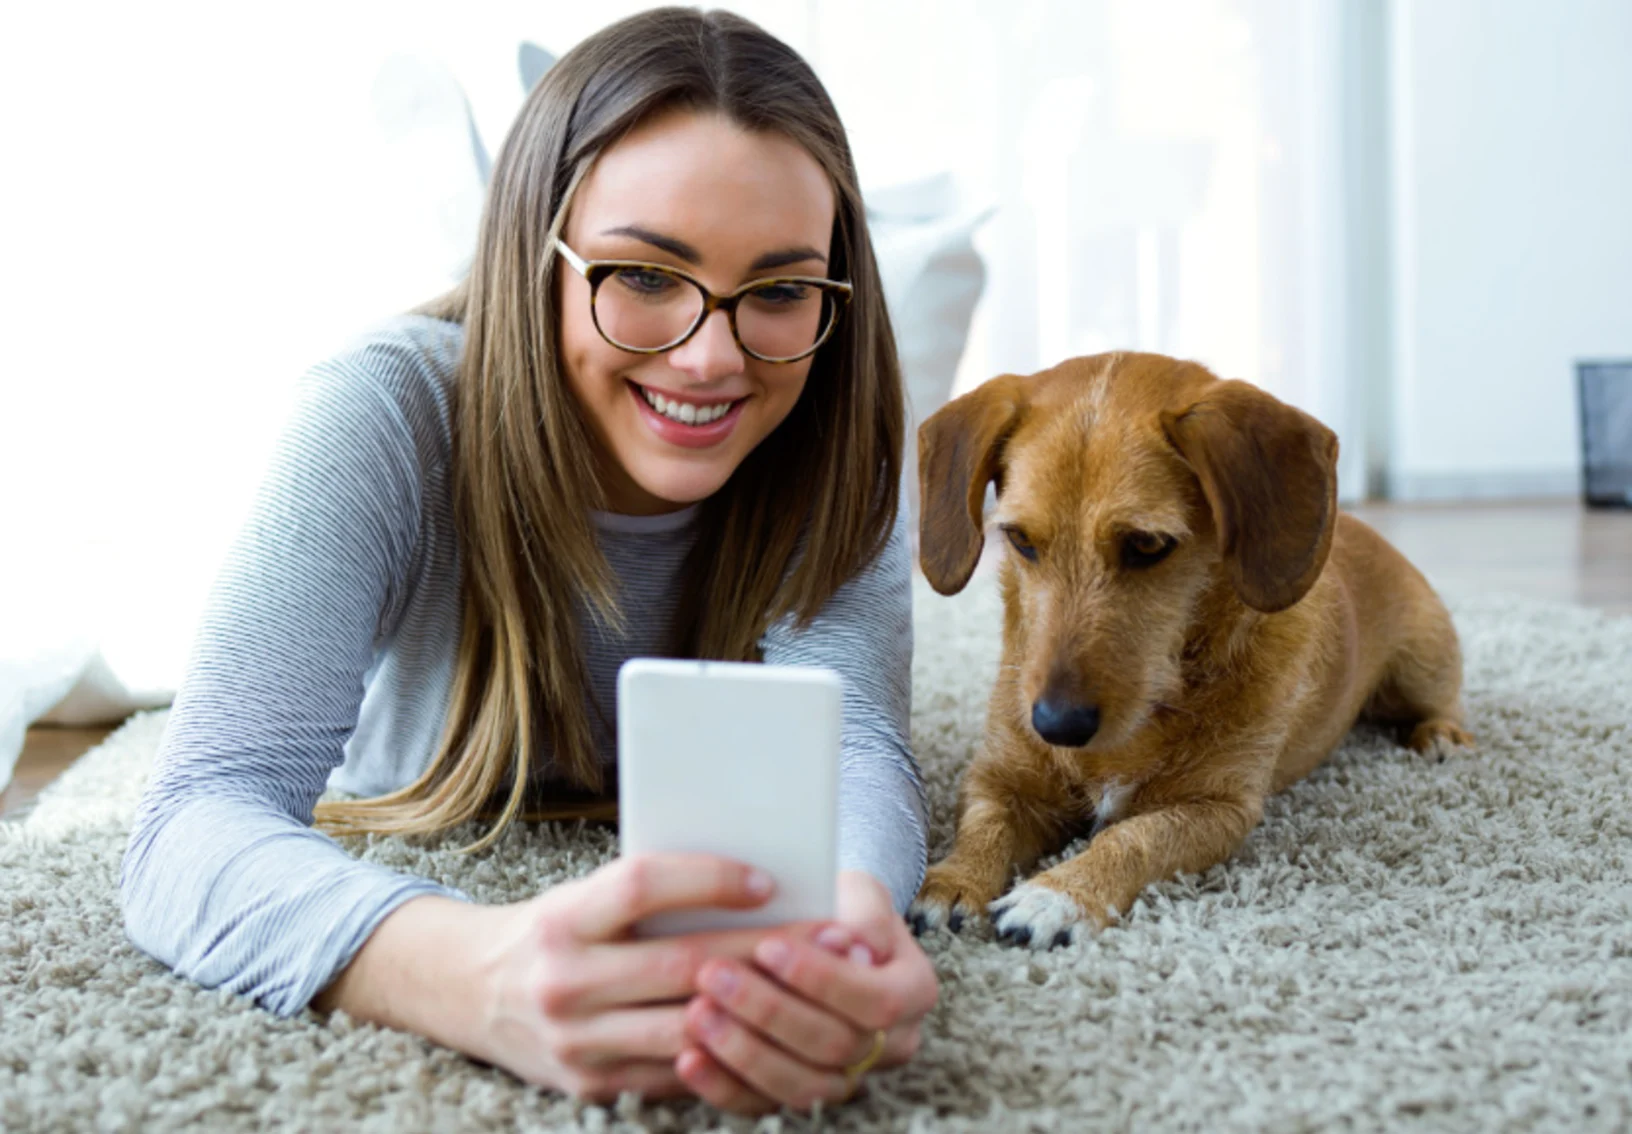 Girl on Phone with Dog Lying on Carpet